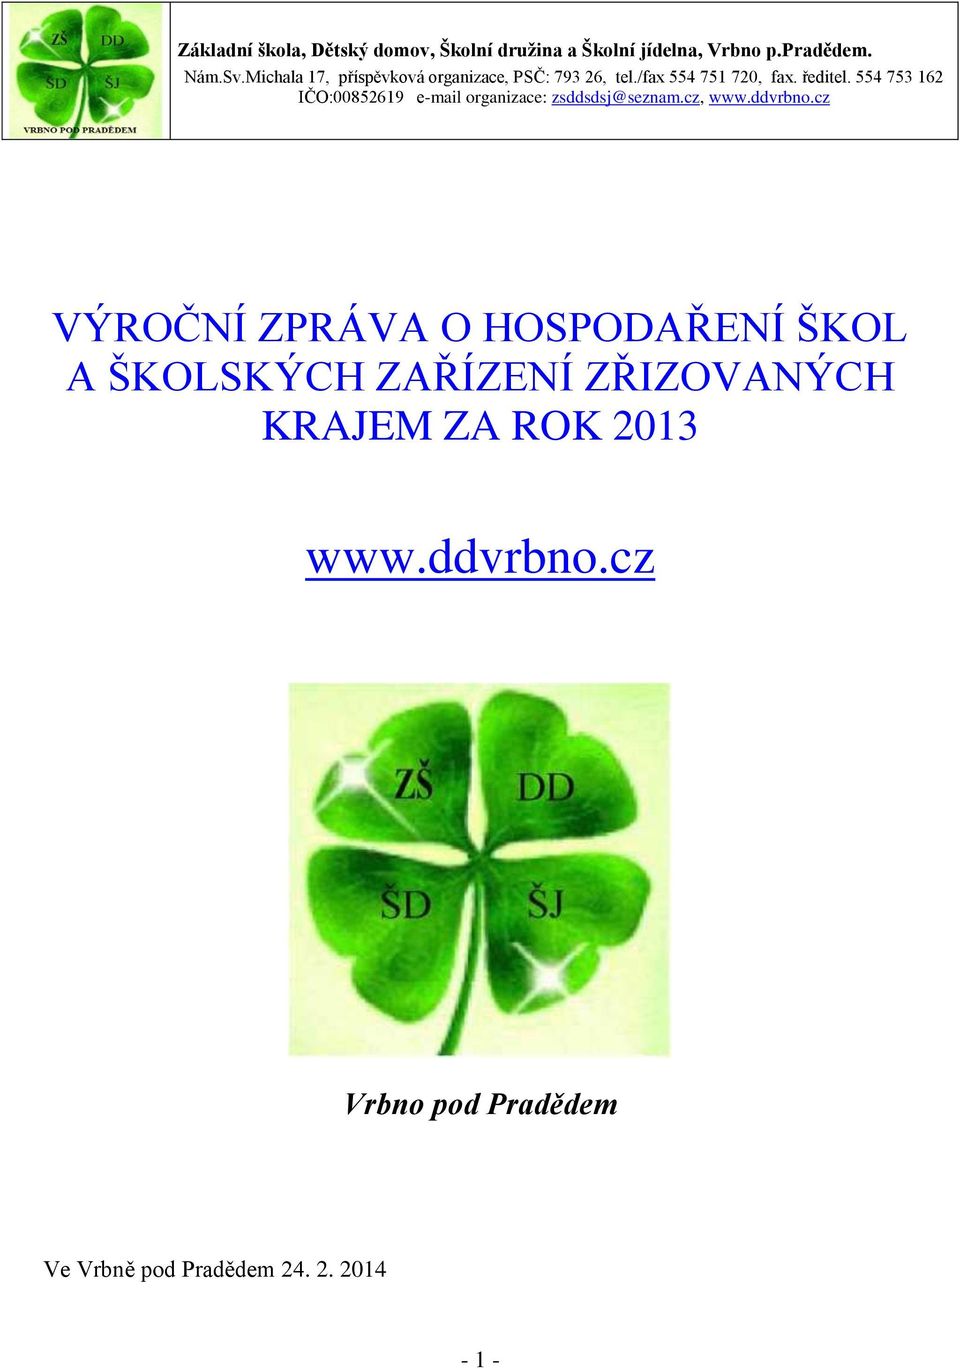 554 753 162 IČO:00852619 e-mail organizace: zsddsdsj@seznam.cz, www.ddvrbno.